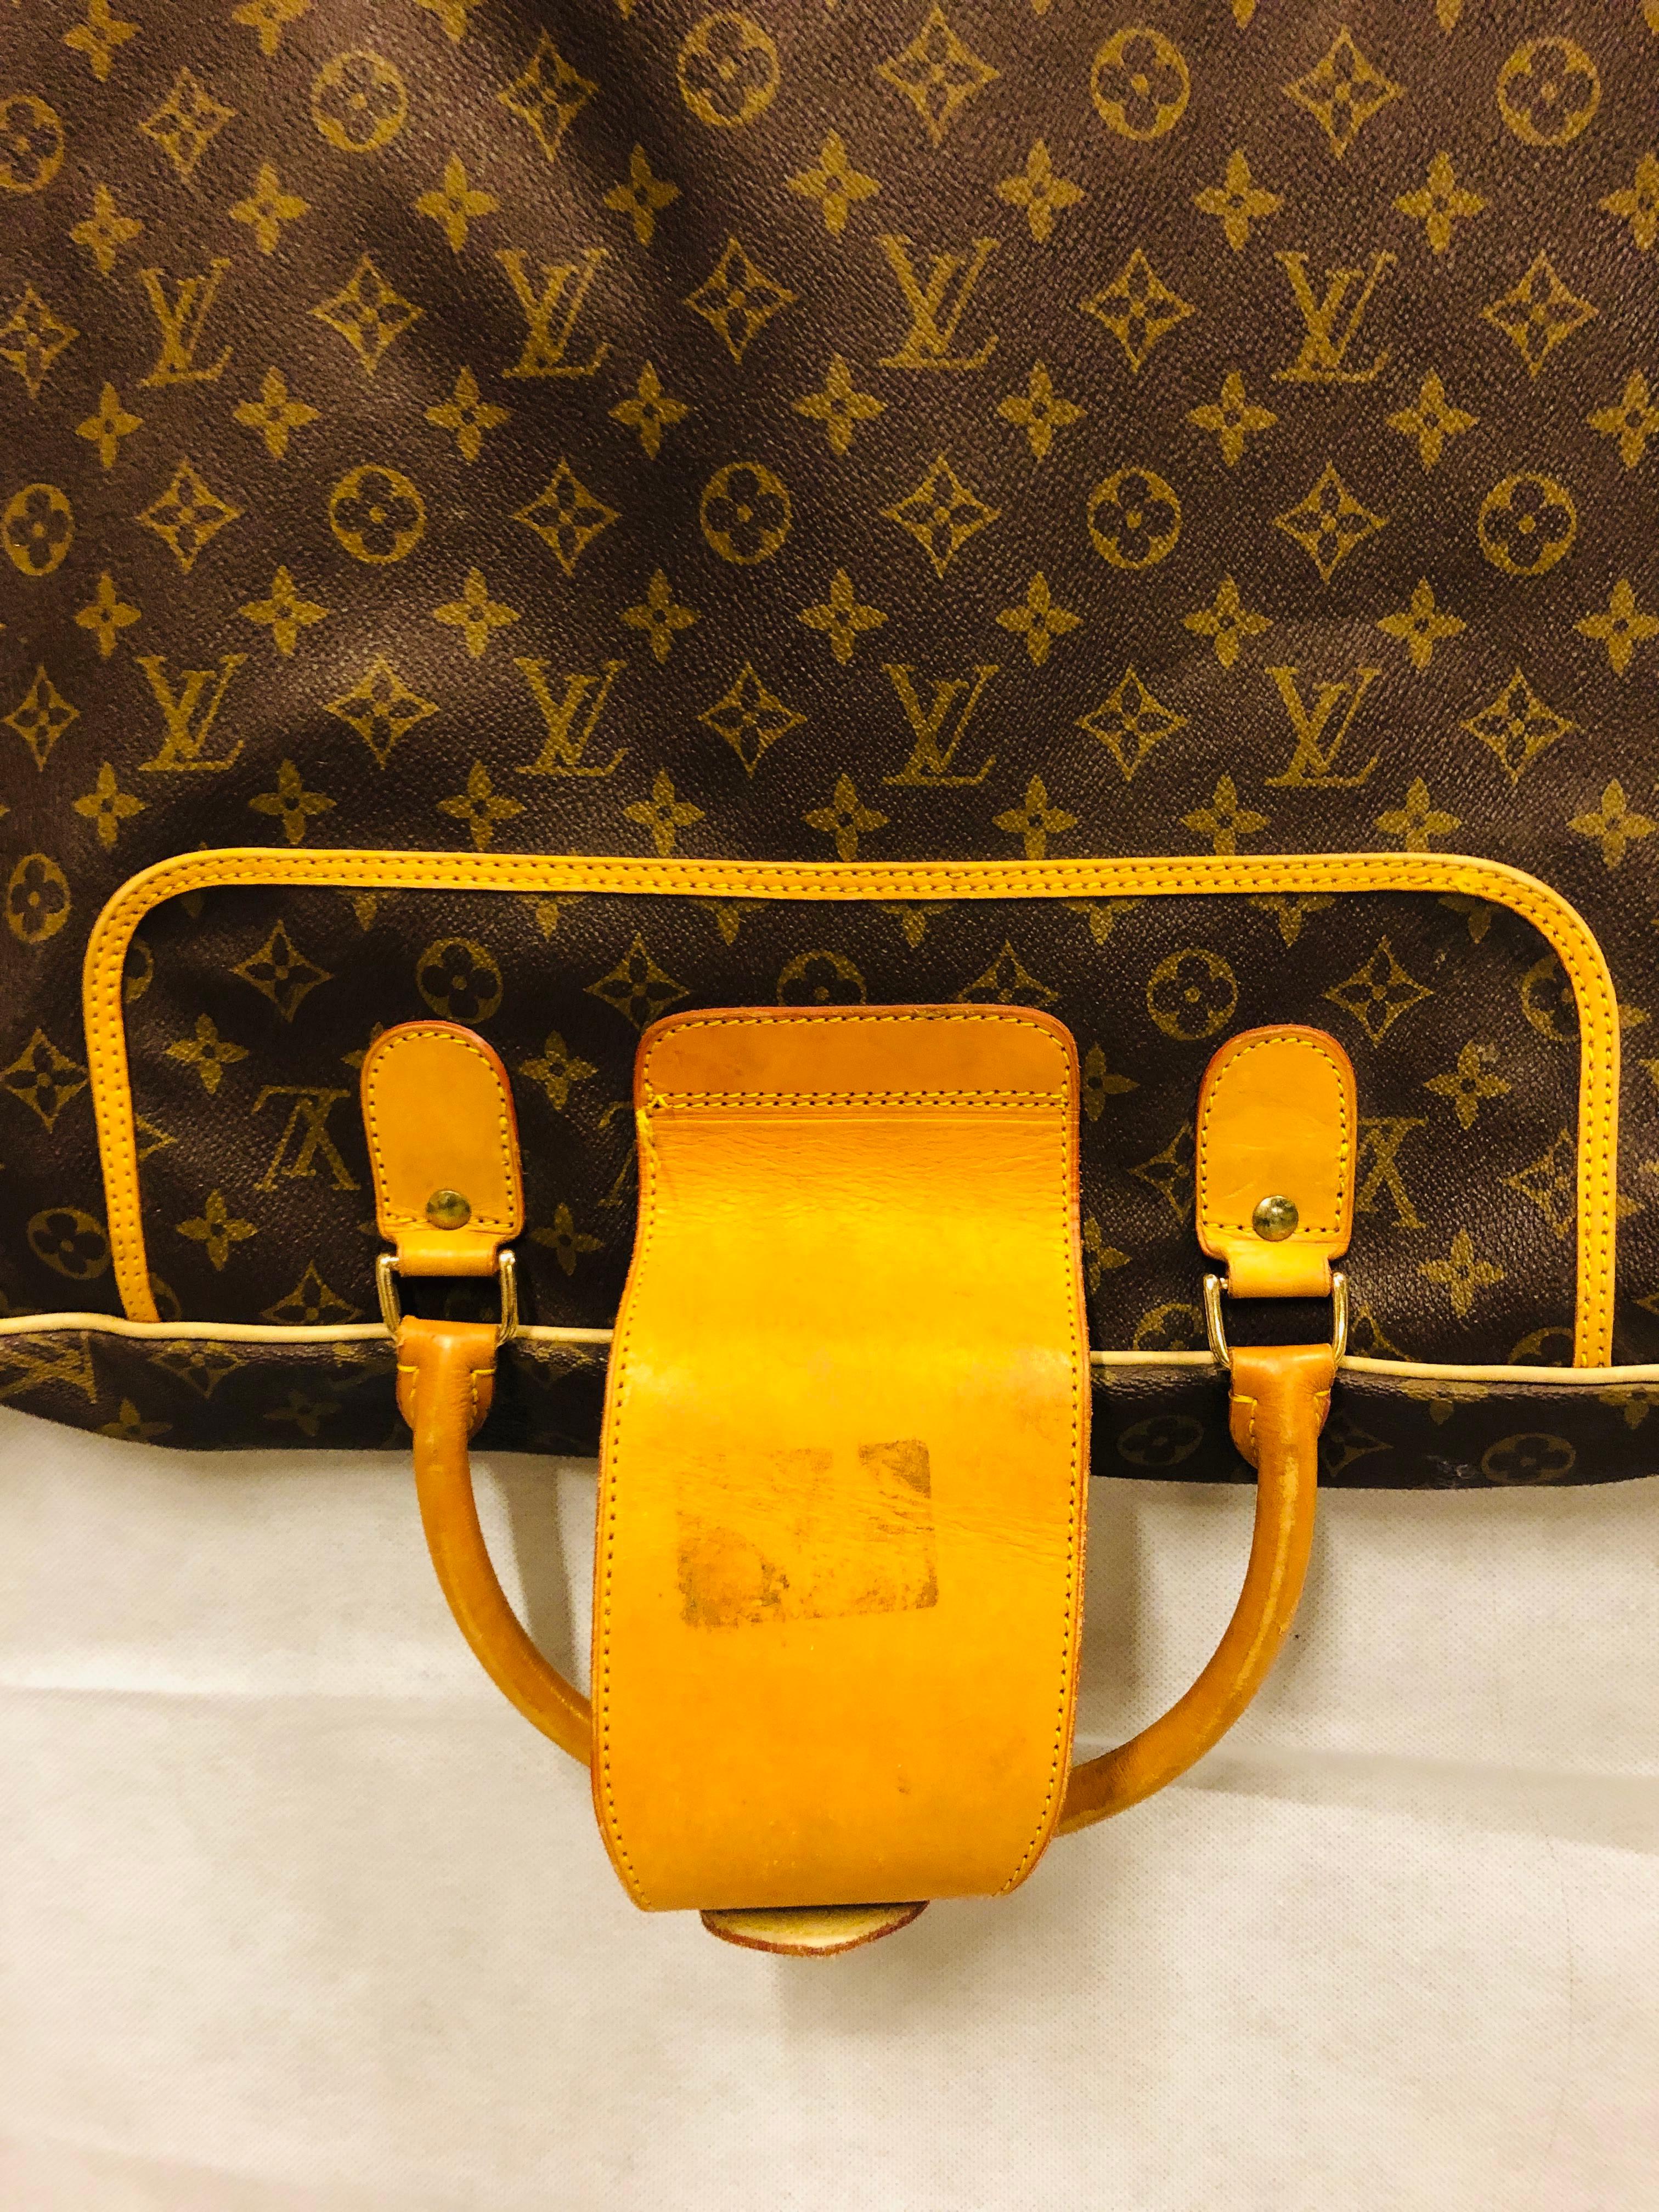 Louis Vuitton Leather Tan And Brown Monogram Garment Bag W/ Zipper Pockets.